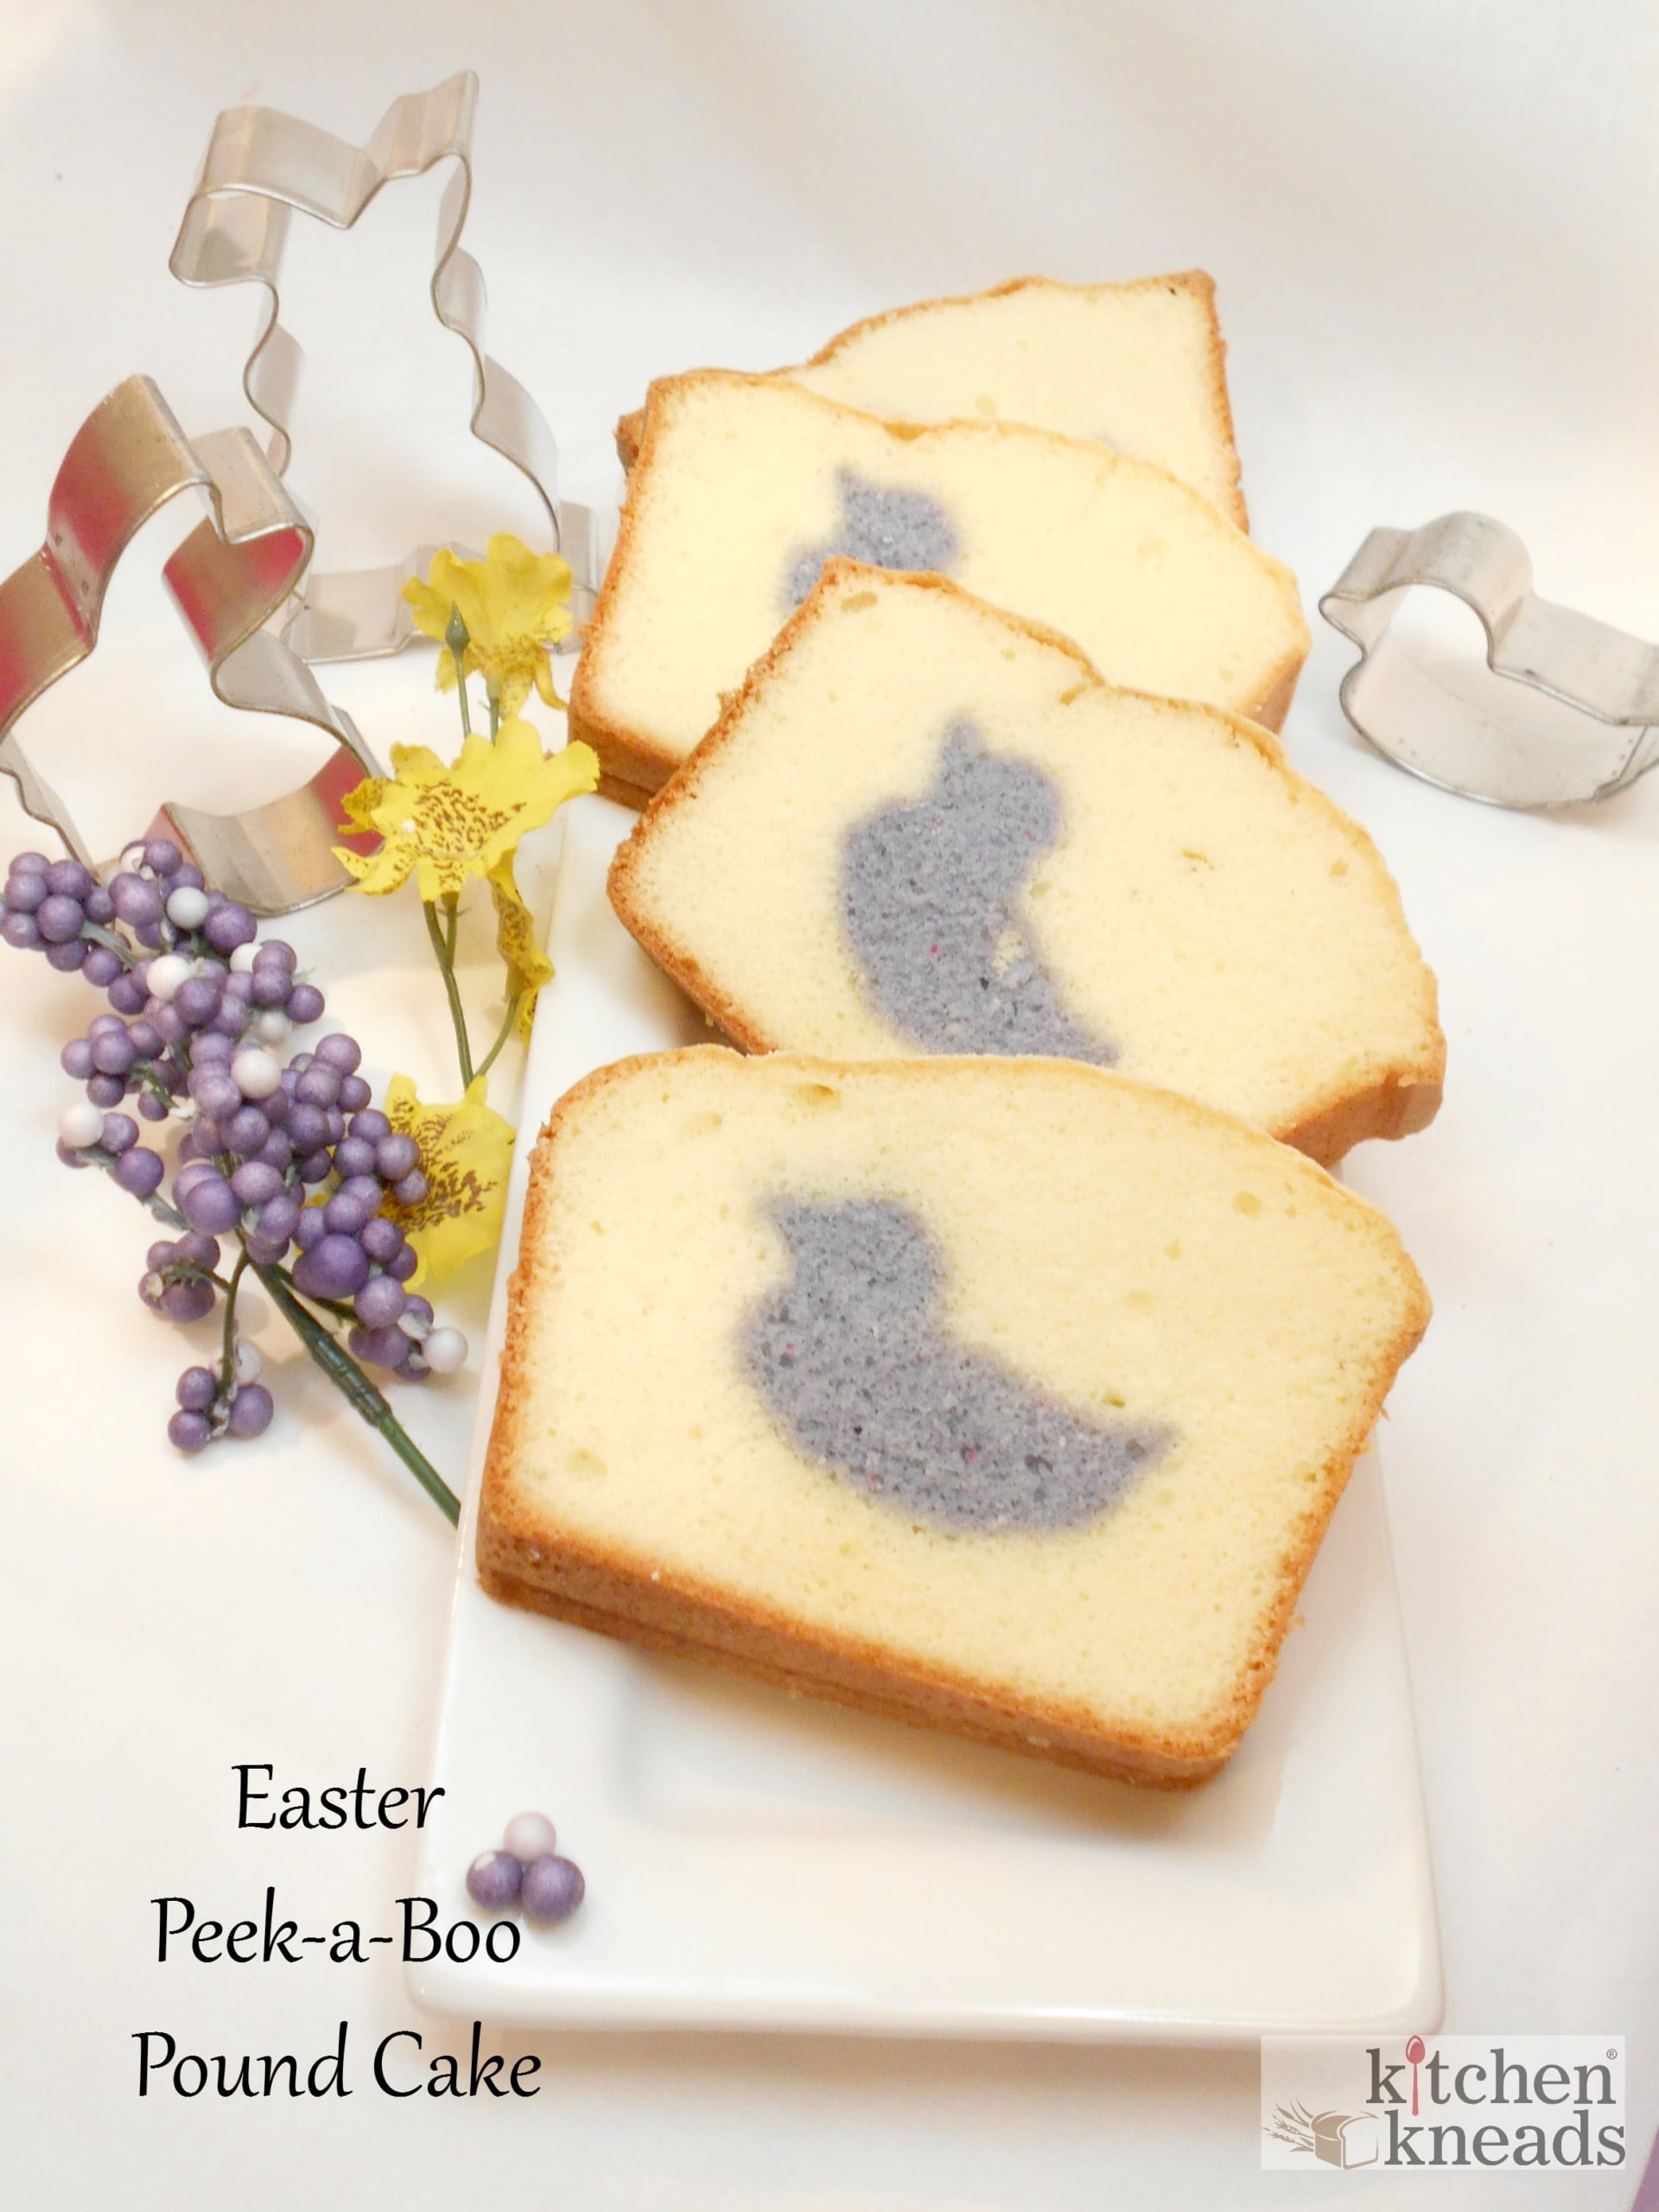 Easter Peek-a-Boo Pound Cake | Enjoy a Surprising Pound Cake this Spring!